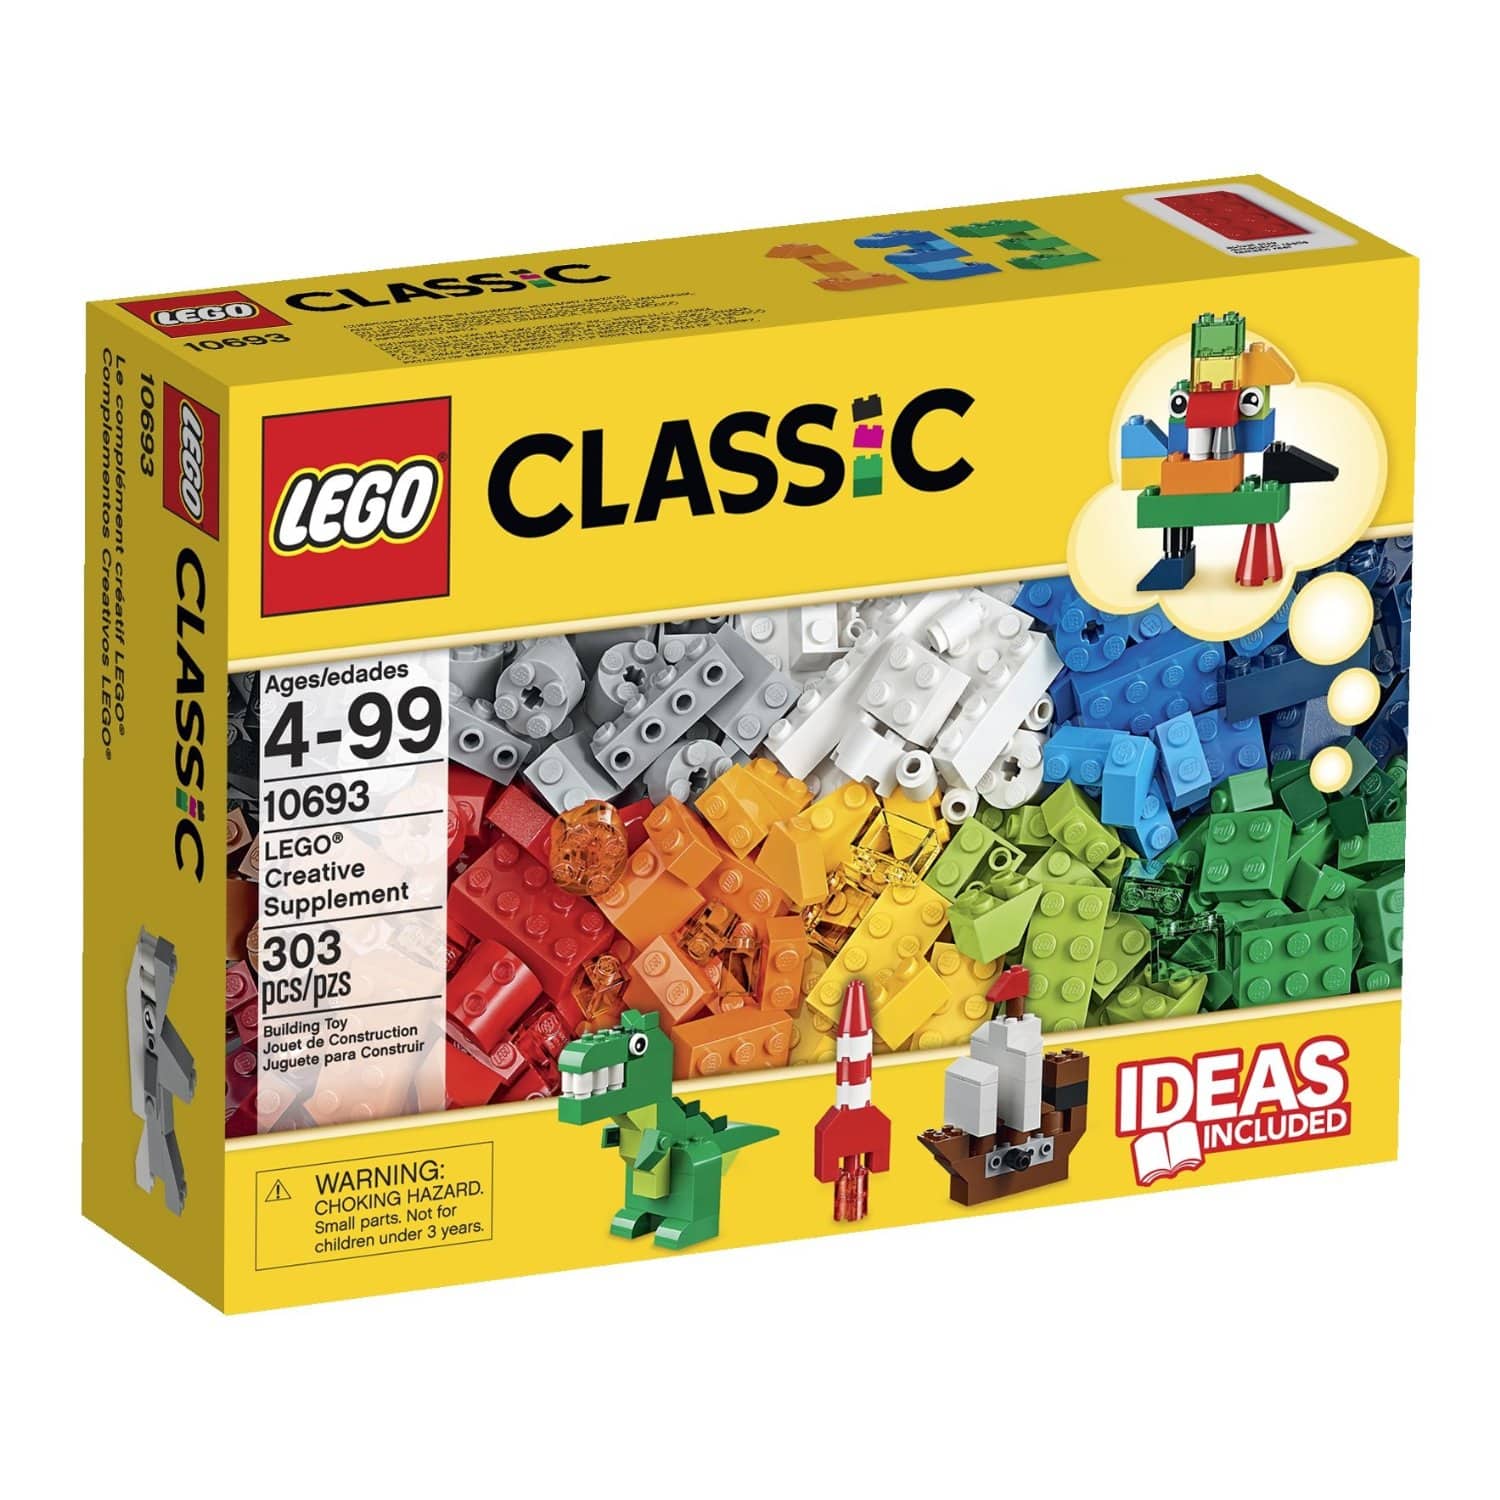 DEAL ALERT: LEGO Classic Creative Supplement – 30% Off!